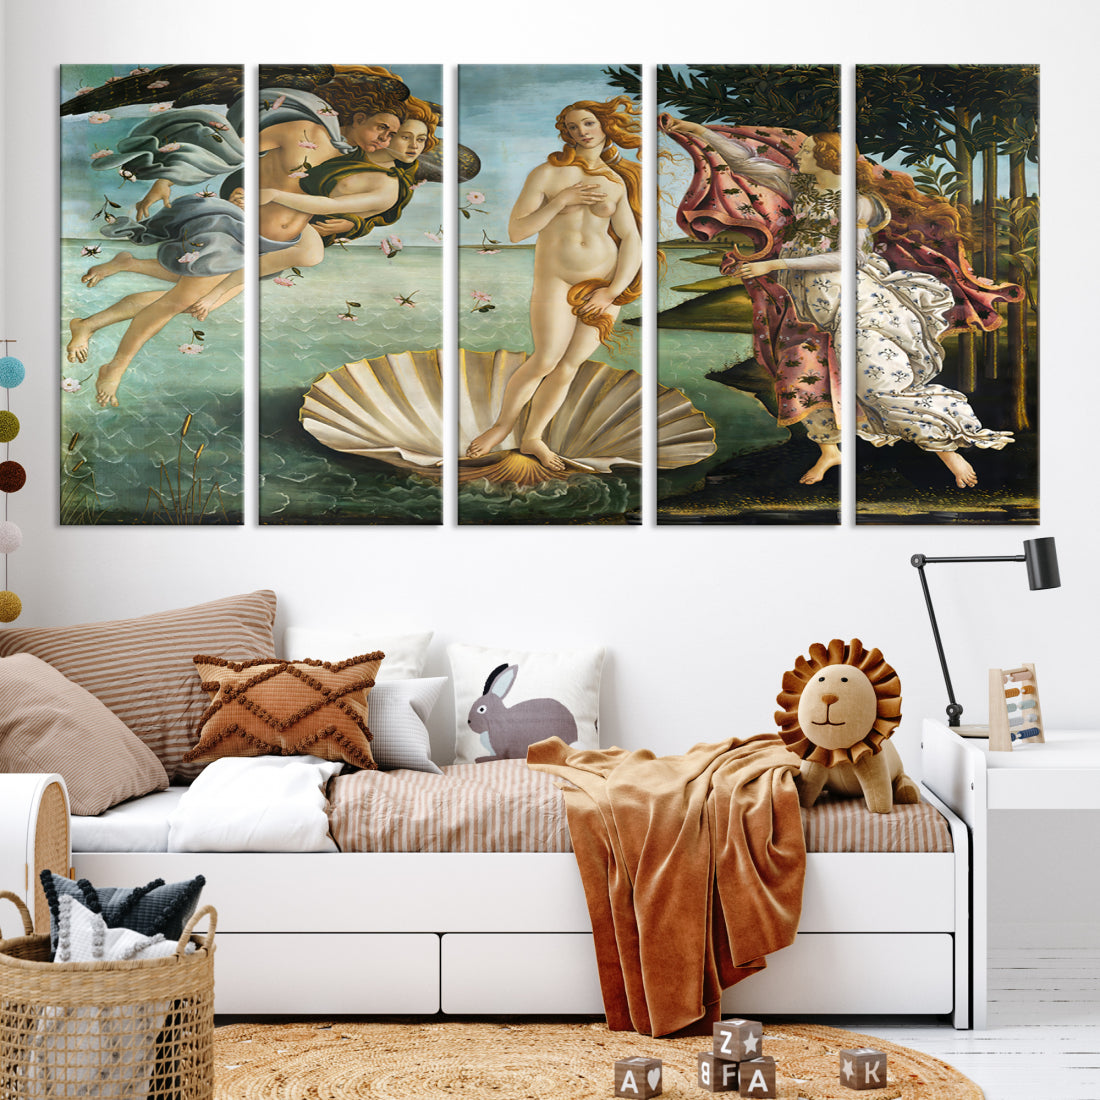 The Birth of Venus Sandro Botticelli Reproduction Canvas Print Classic Painting